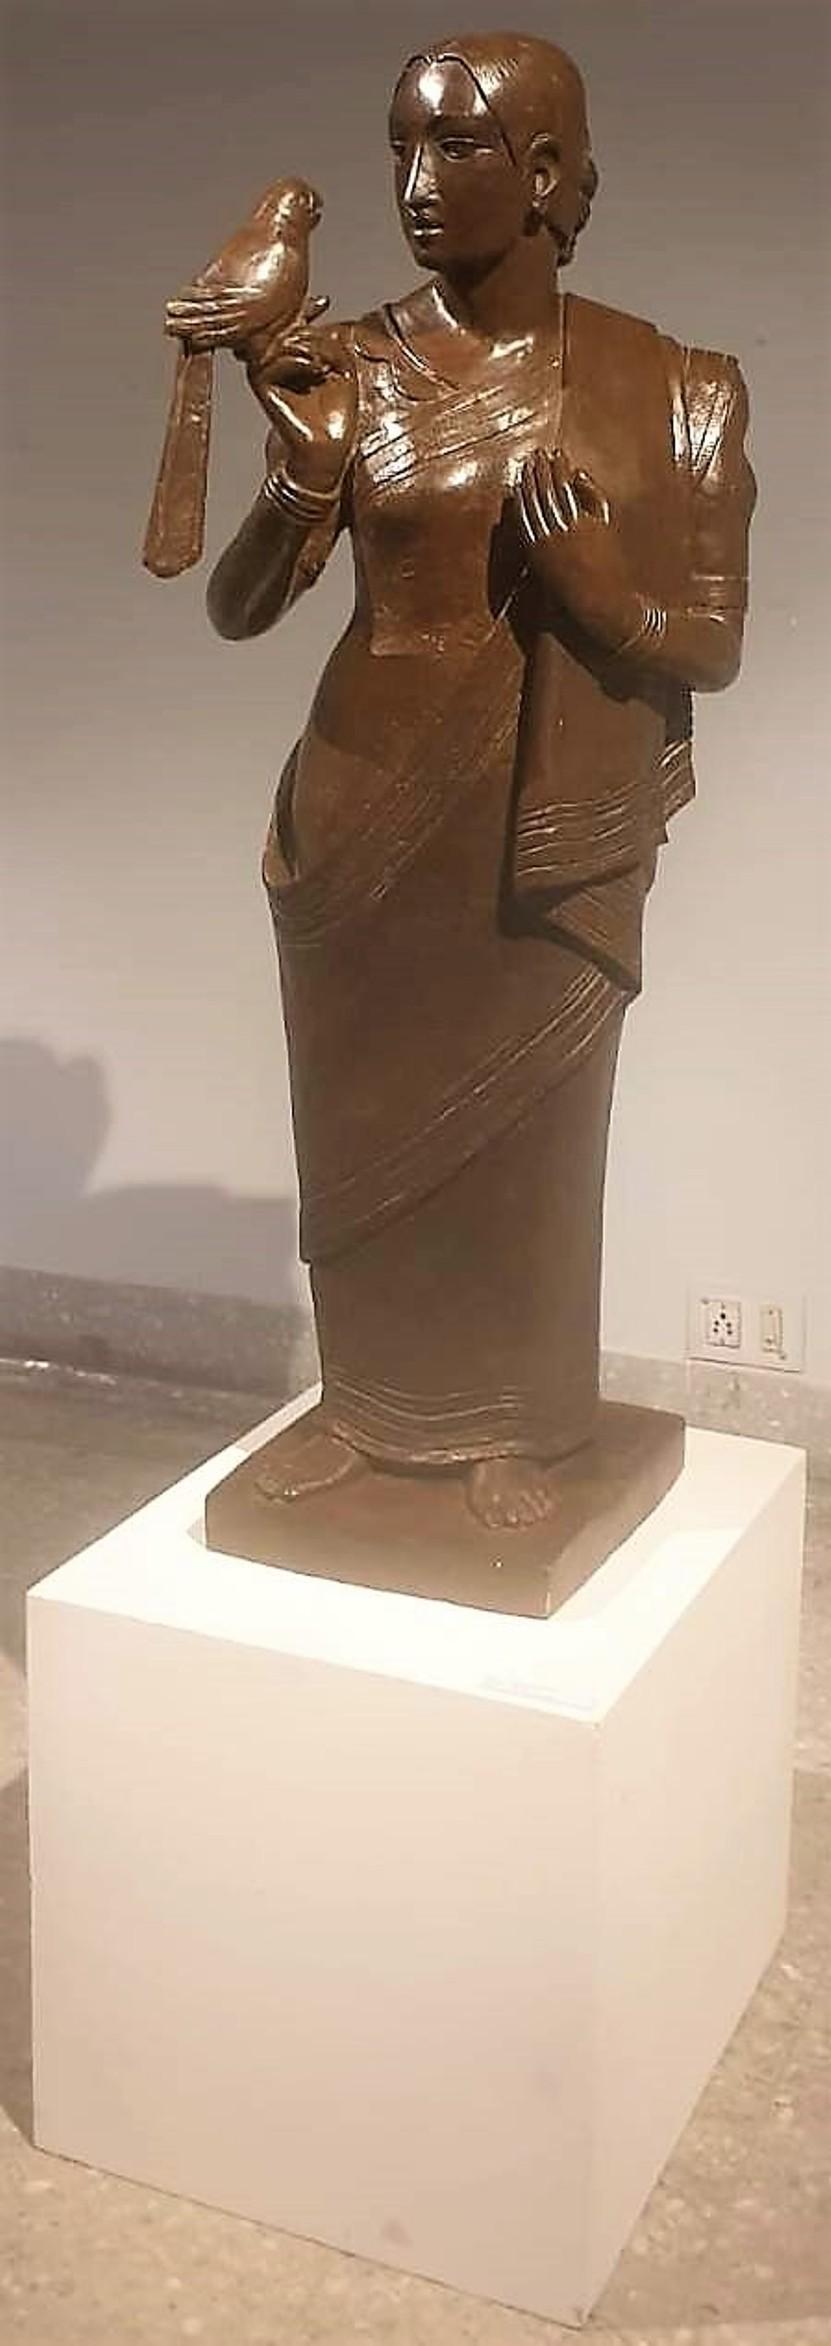 Bouthakurani, Bronze Sculpture by Lalu Prasad Shaw "In Stock"